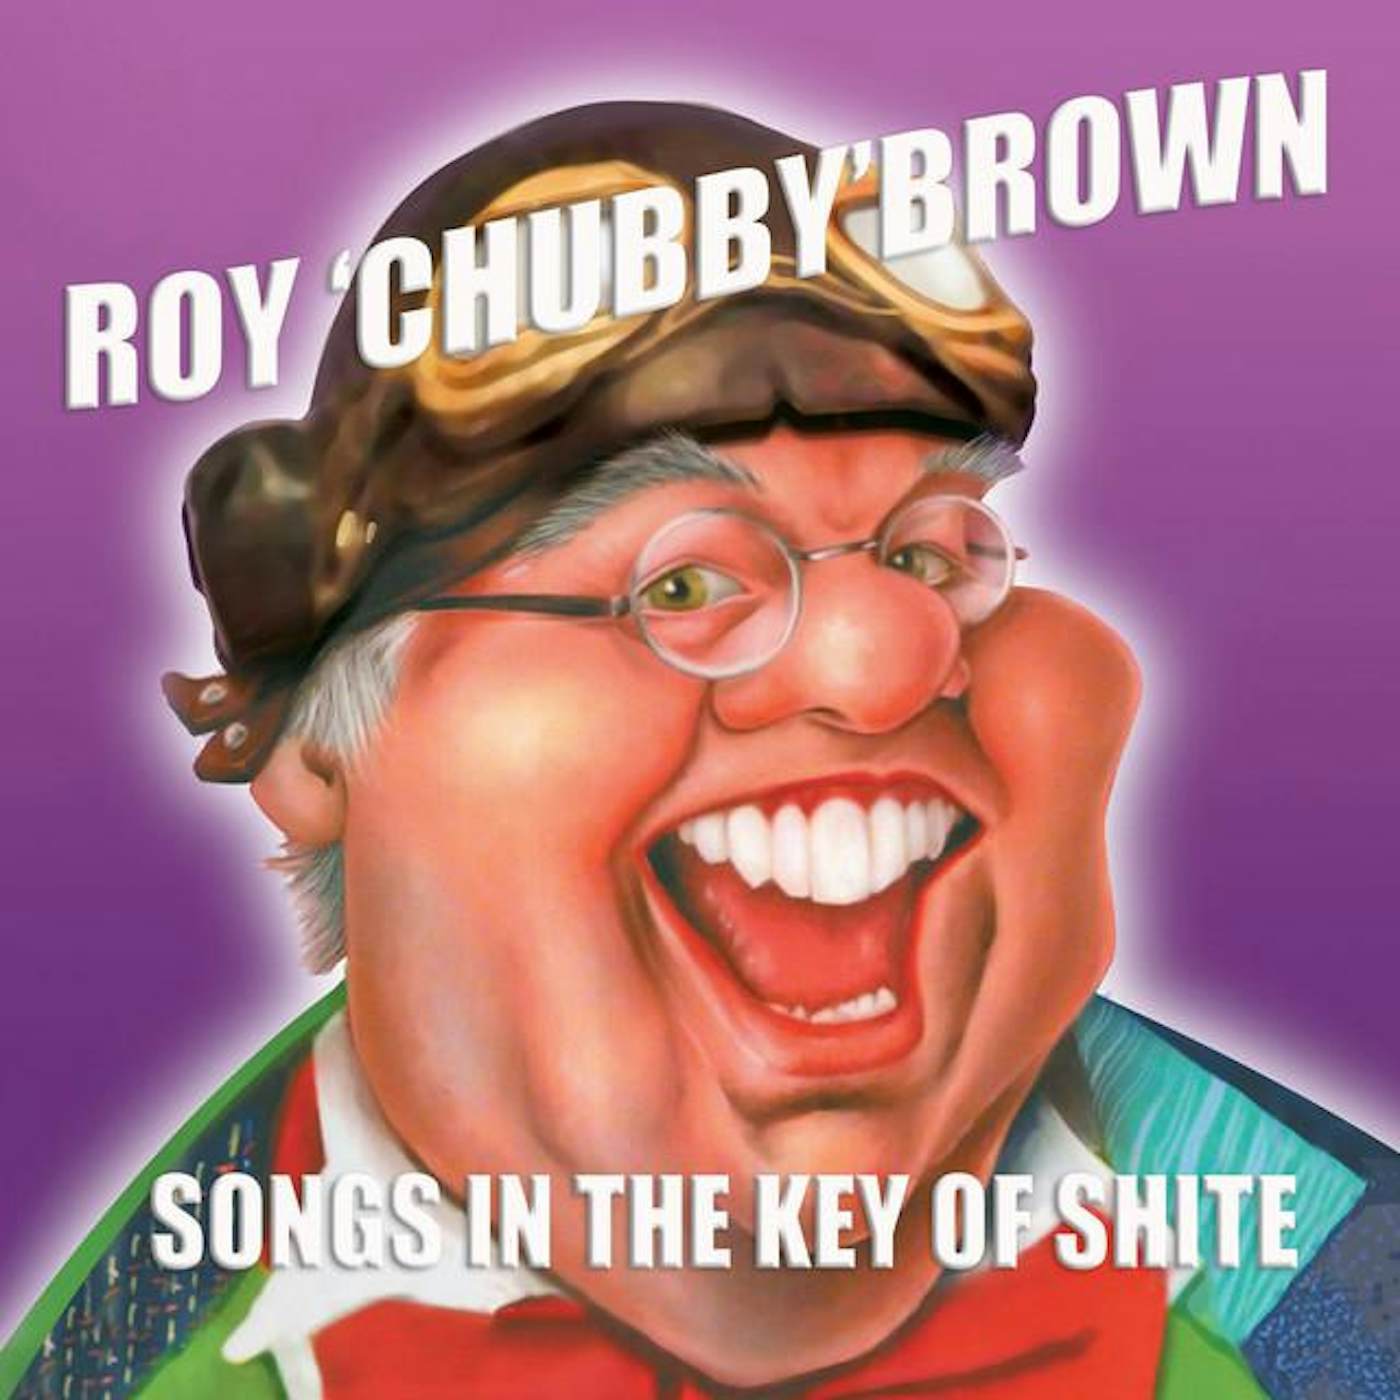 Roy "Chubby" Brown